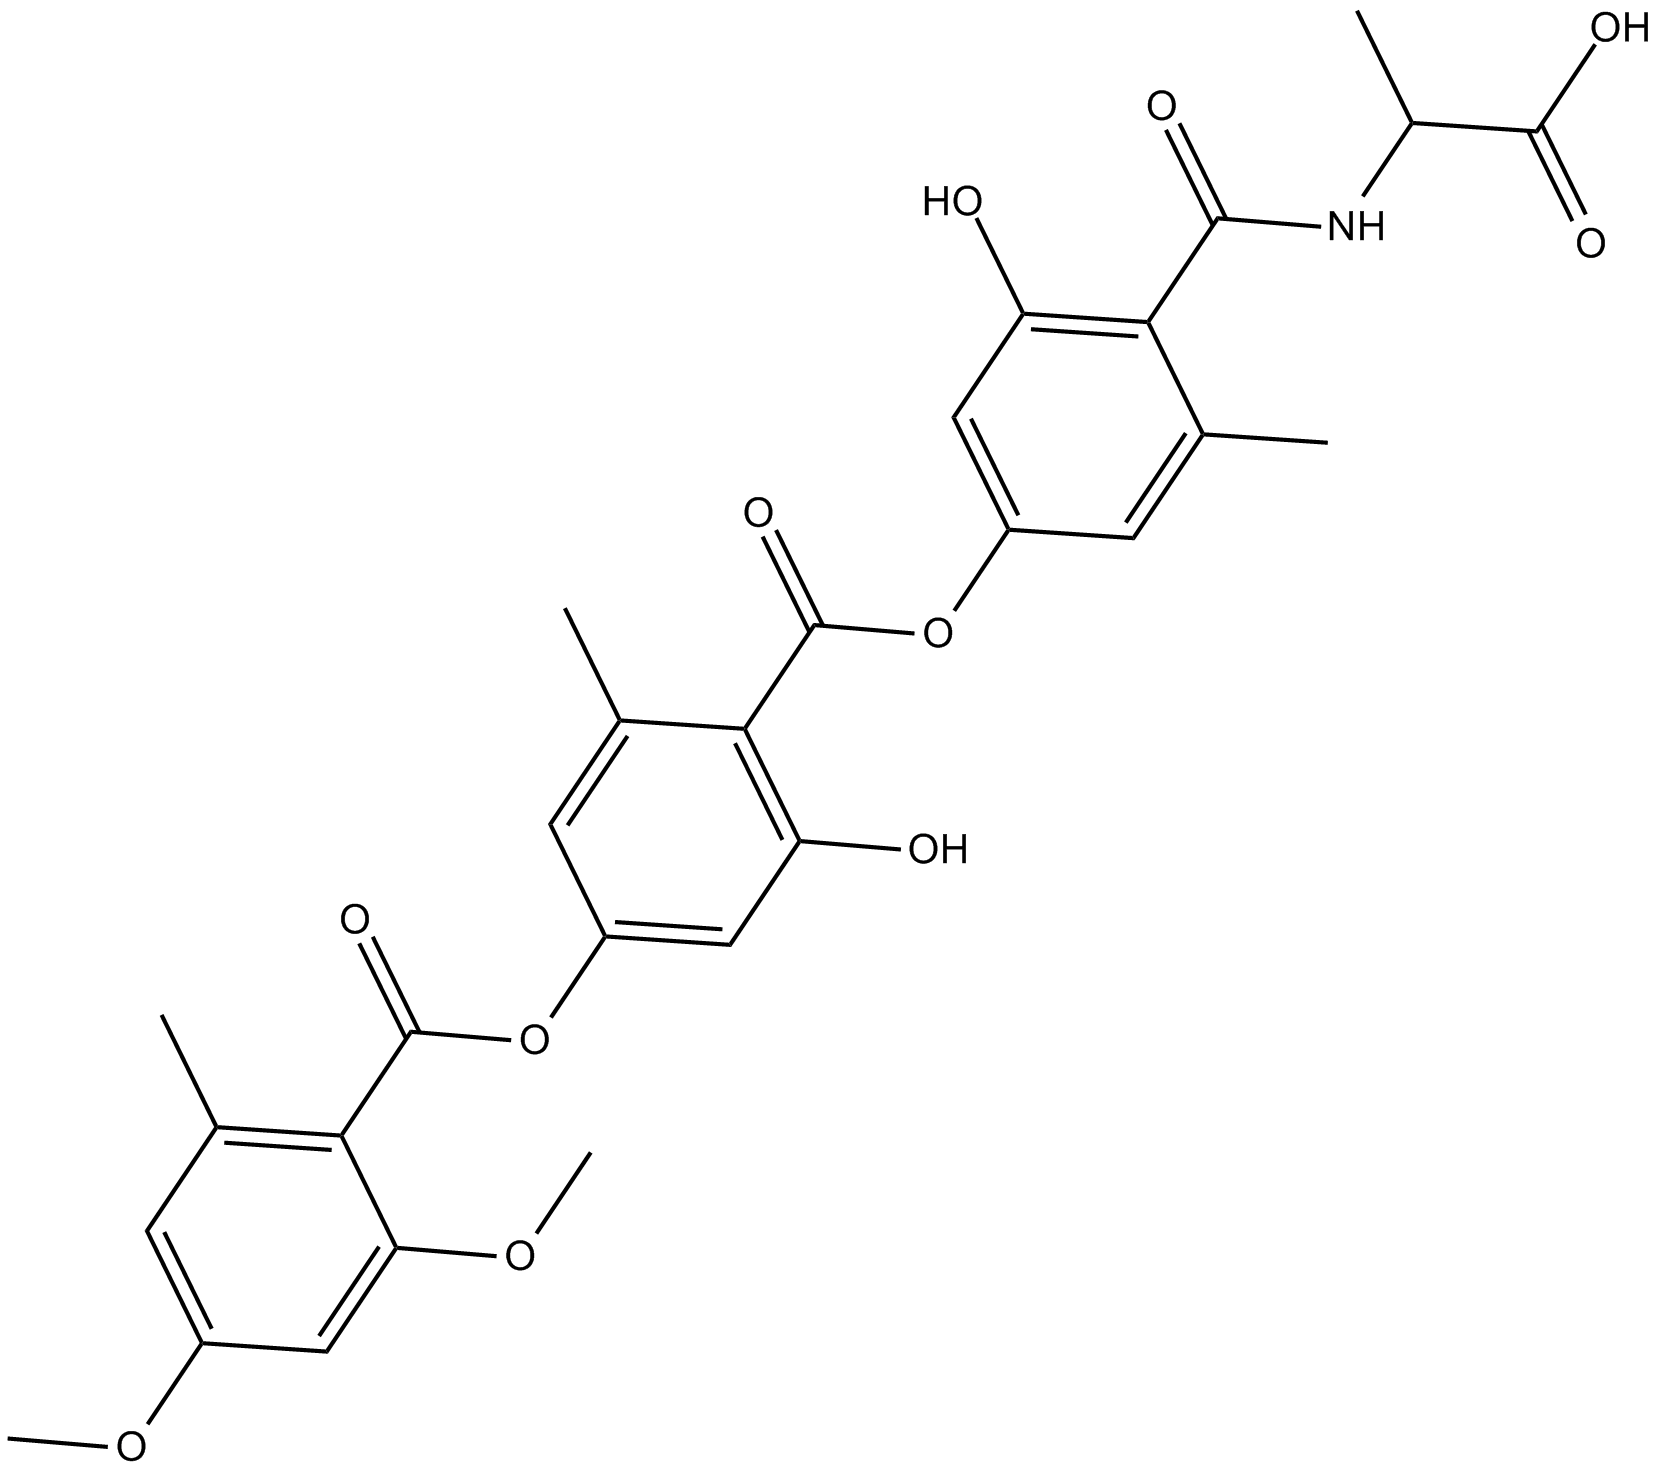 Amidepsine A  Chemical Structure